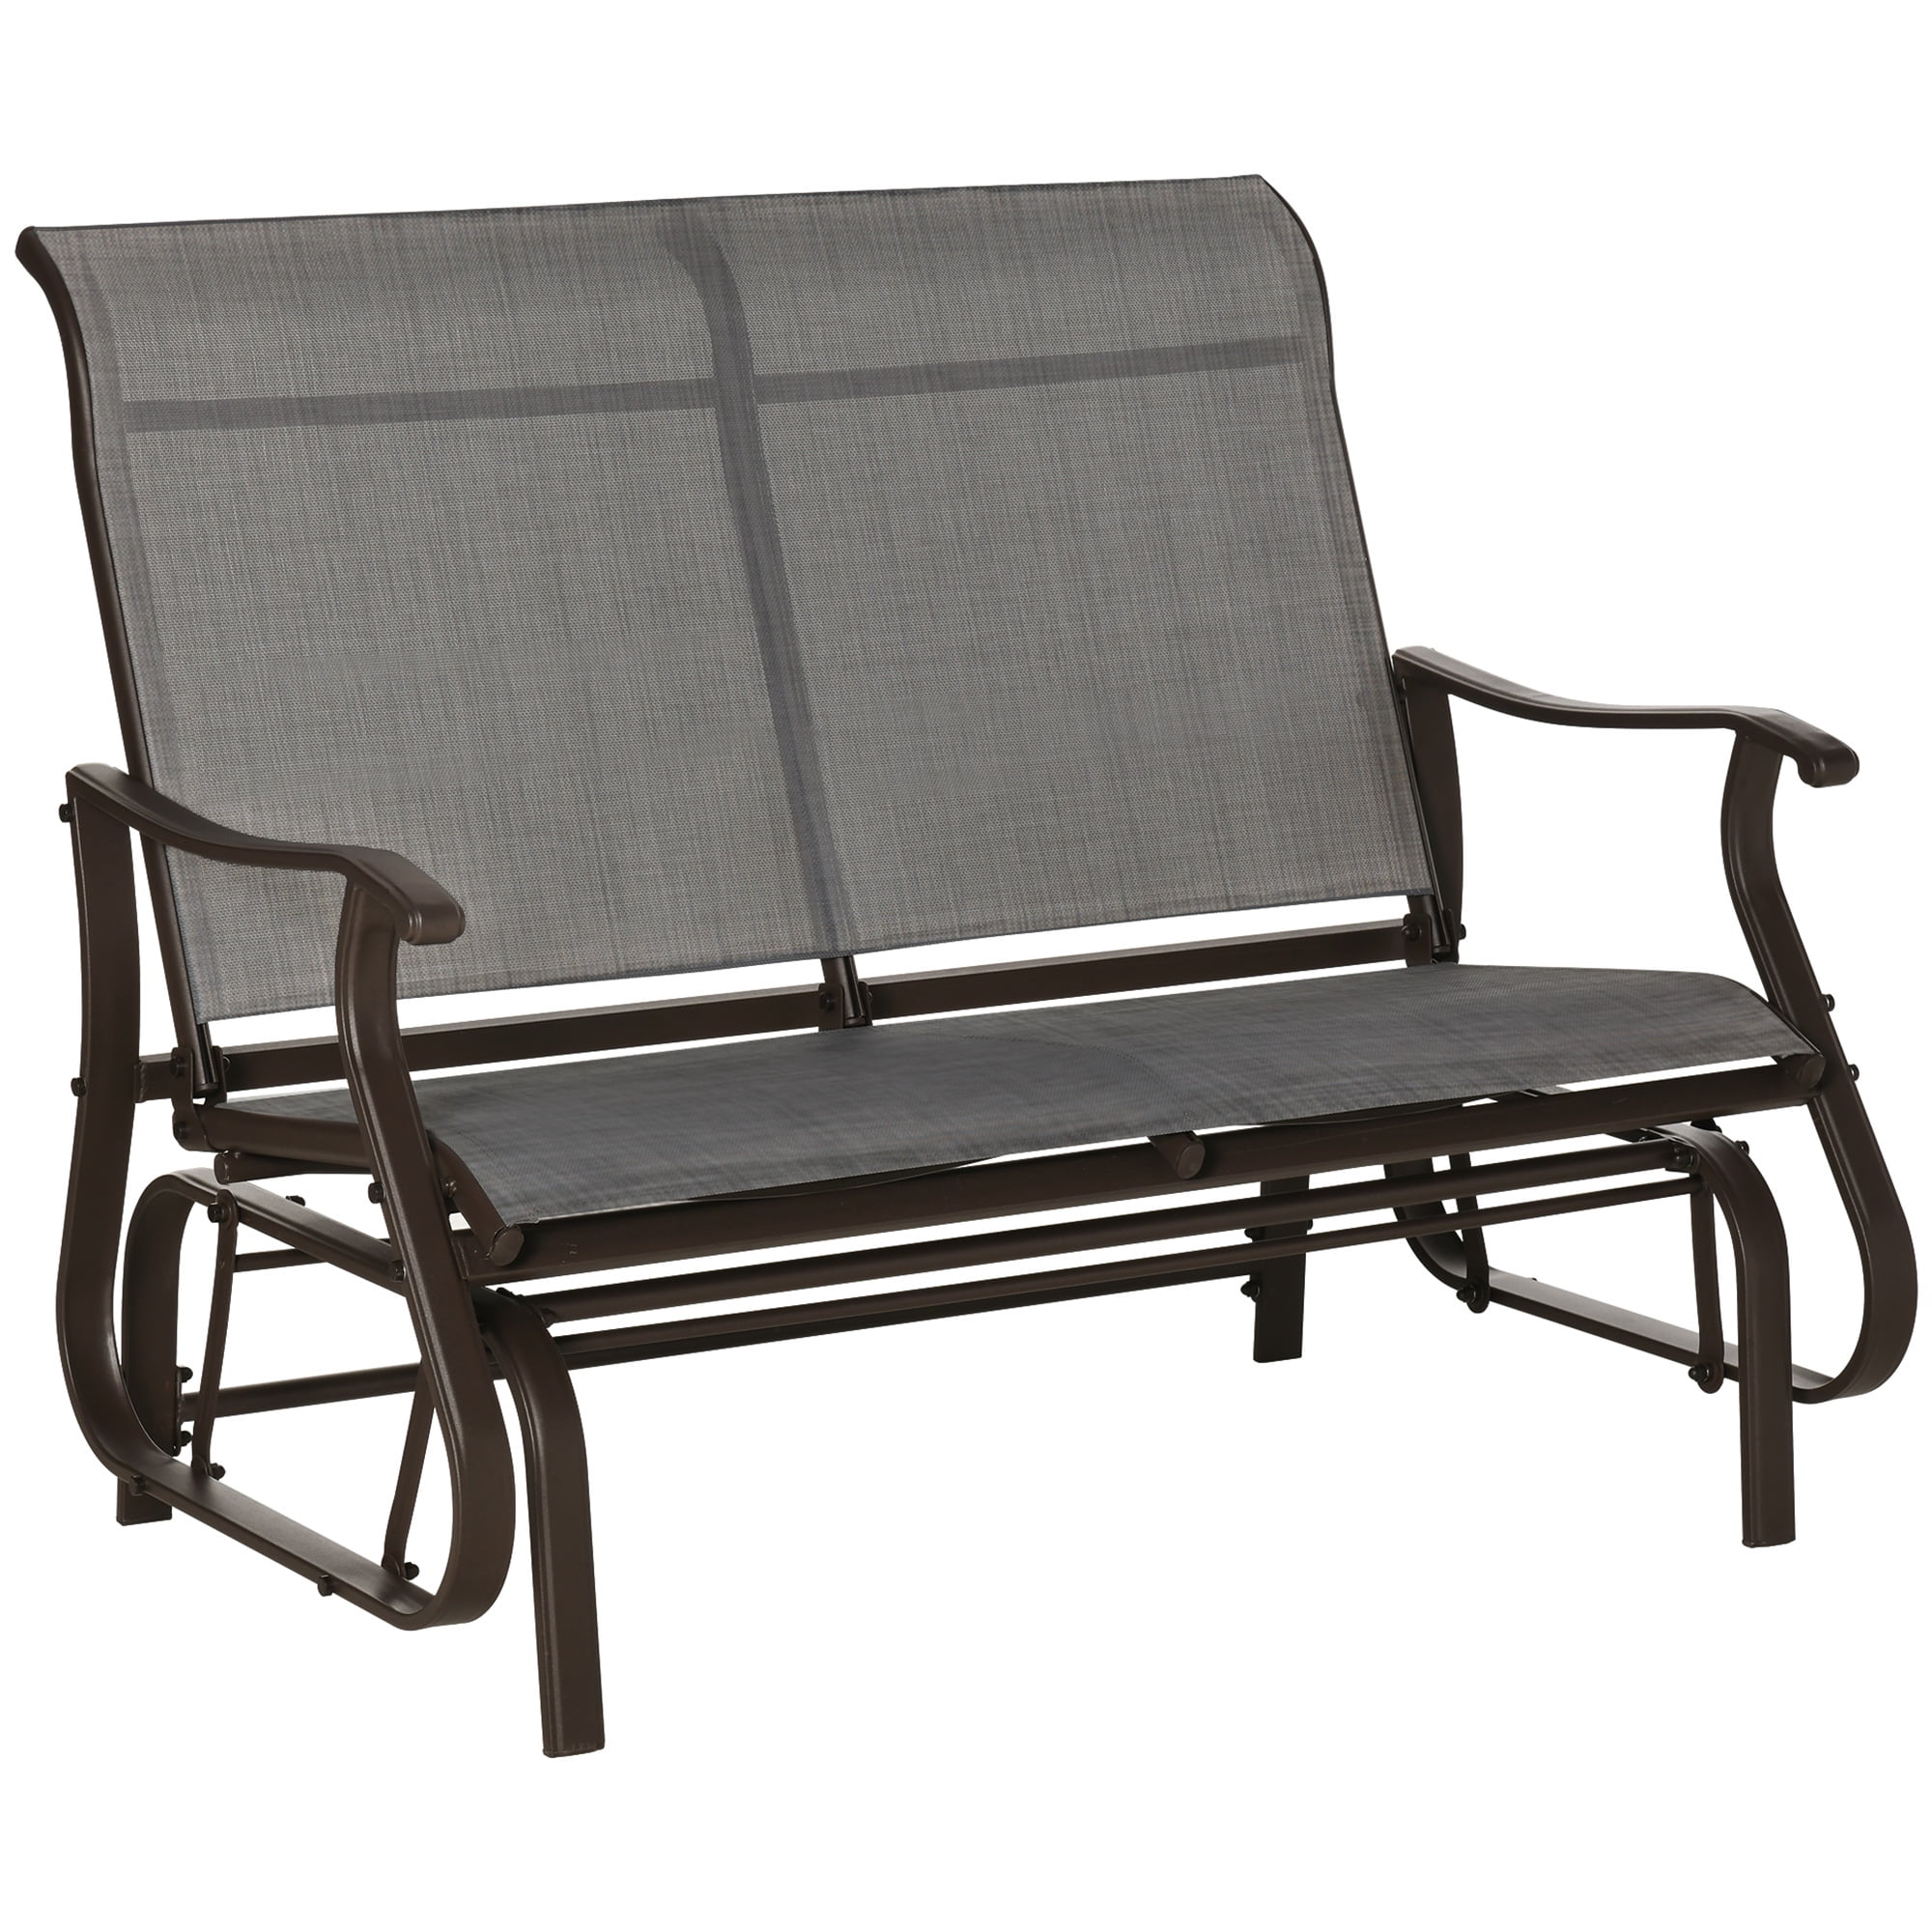 DORTALA 48 Outdoor Patio Swing Glider Bench Chair Loveseat Rocker Lounge Backyard Grey 